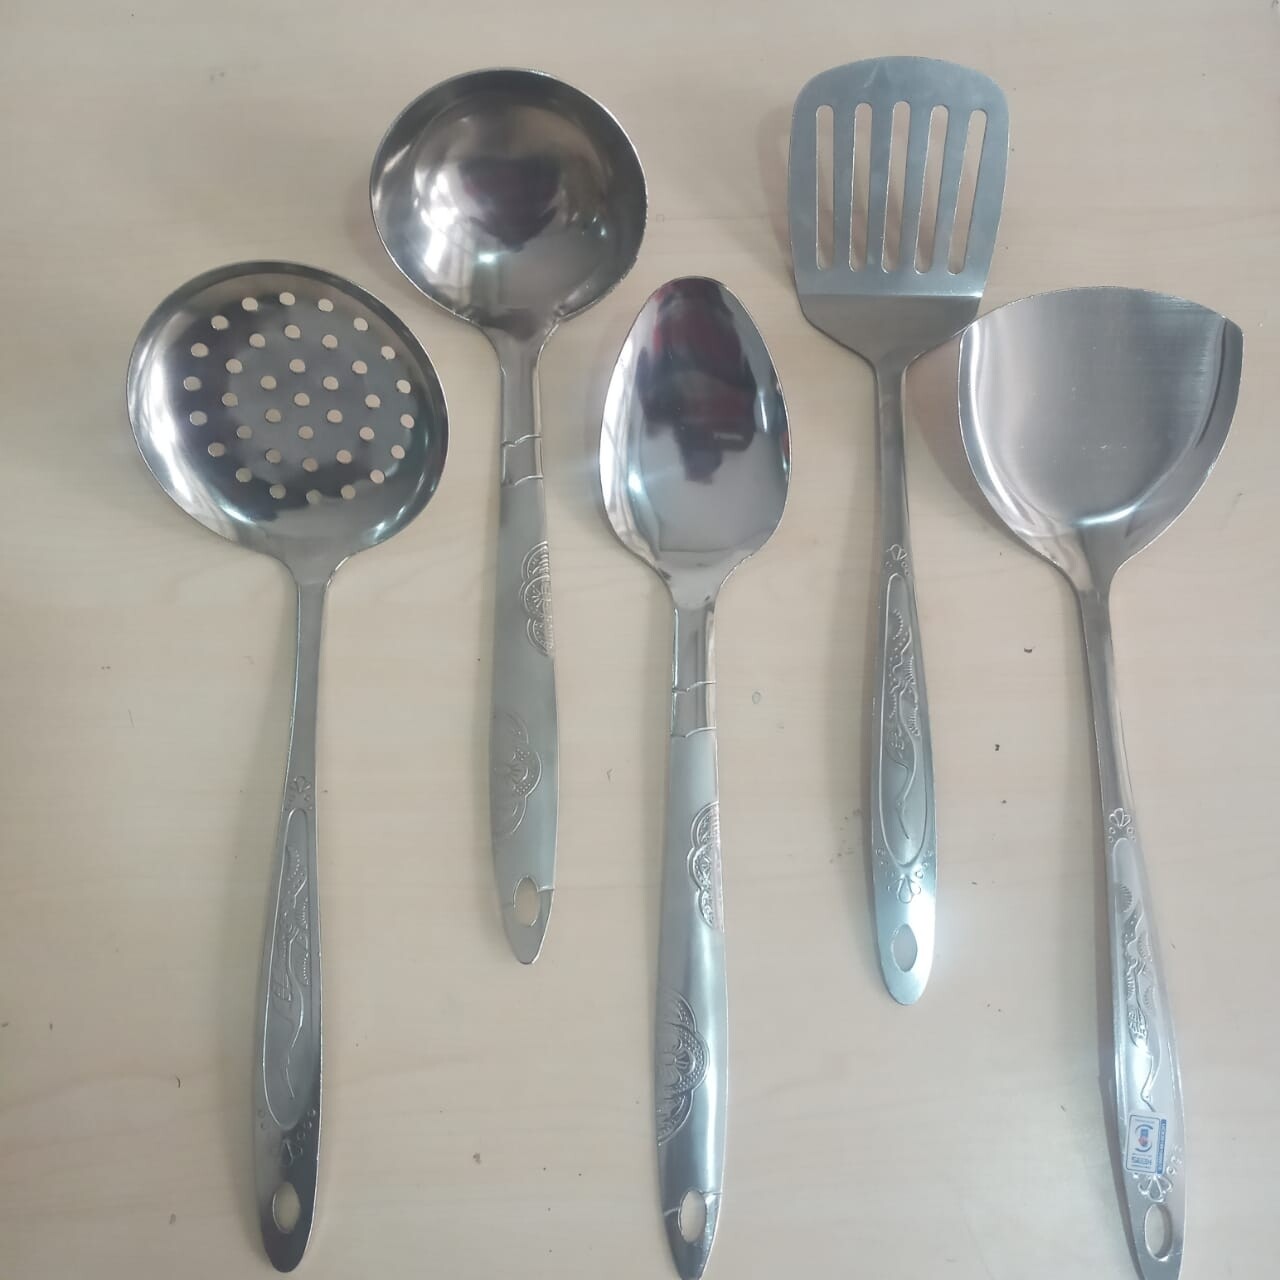 Sungura heavy stainless steel kitchen spoons 5pcs set. 13". 1Soup spoon, 1serving spoon, 1turner spoon,1flat spoon, 1skimmer